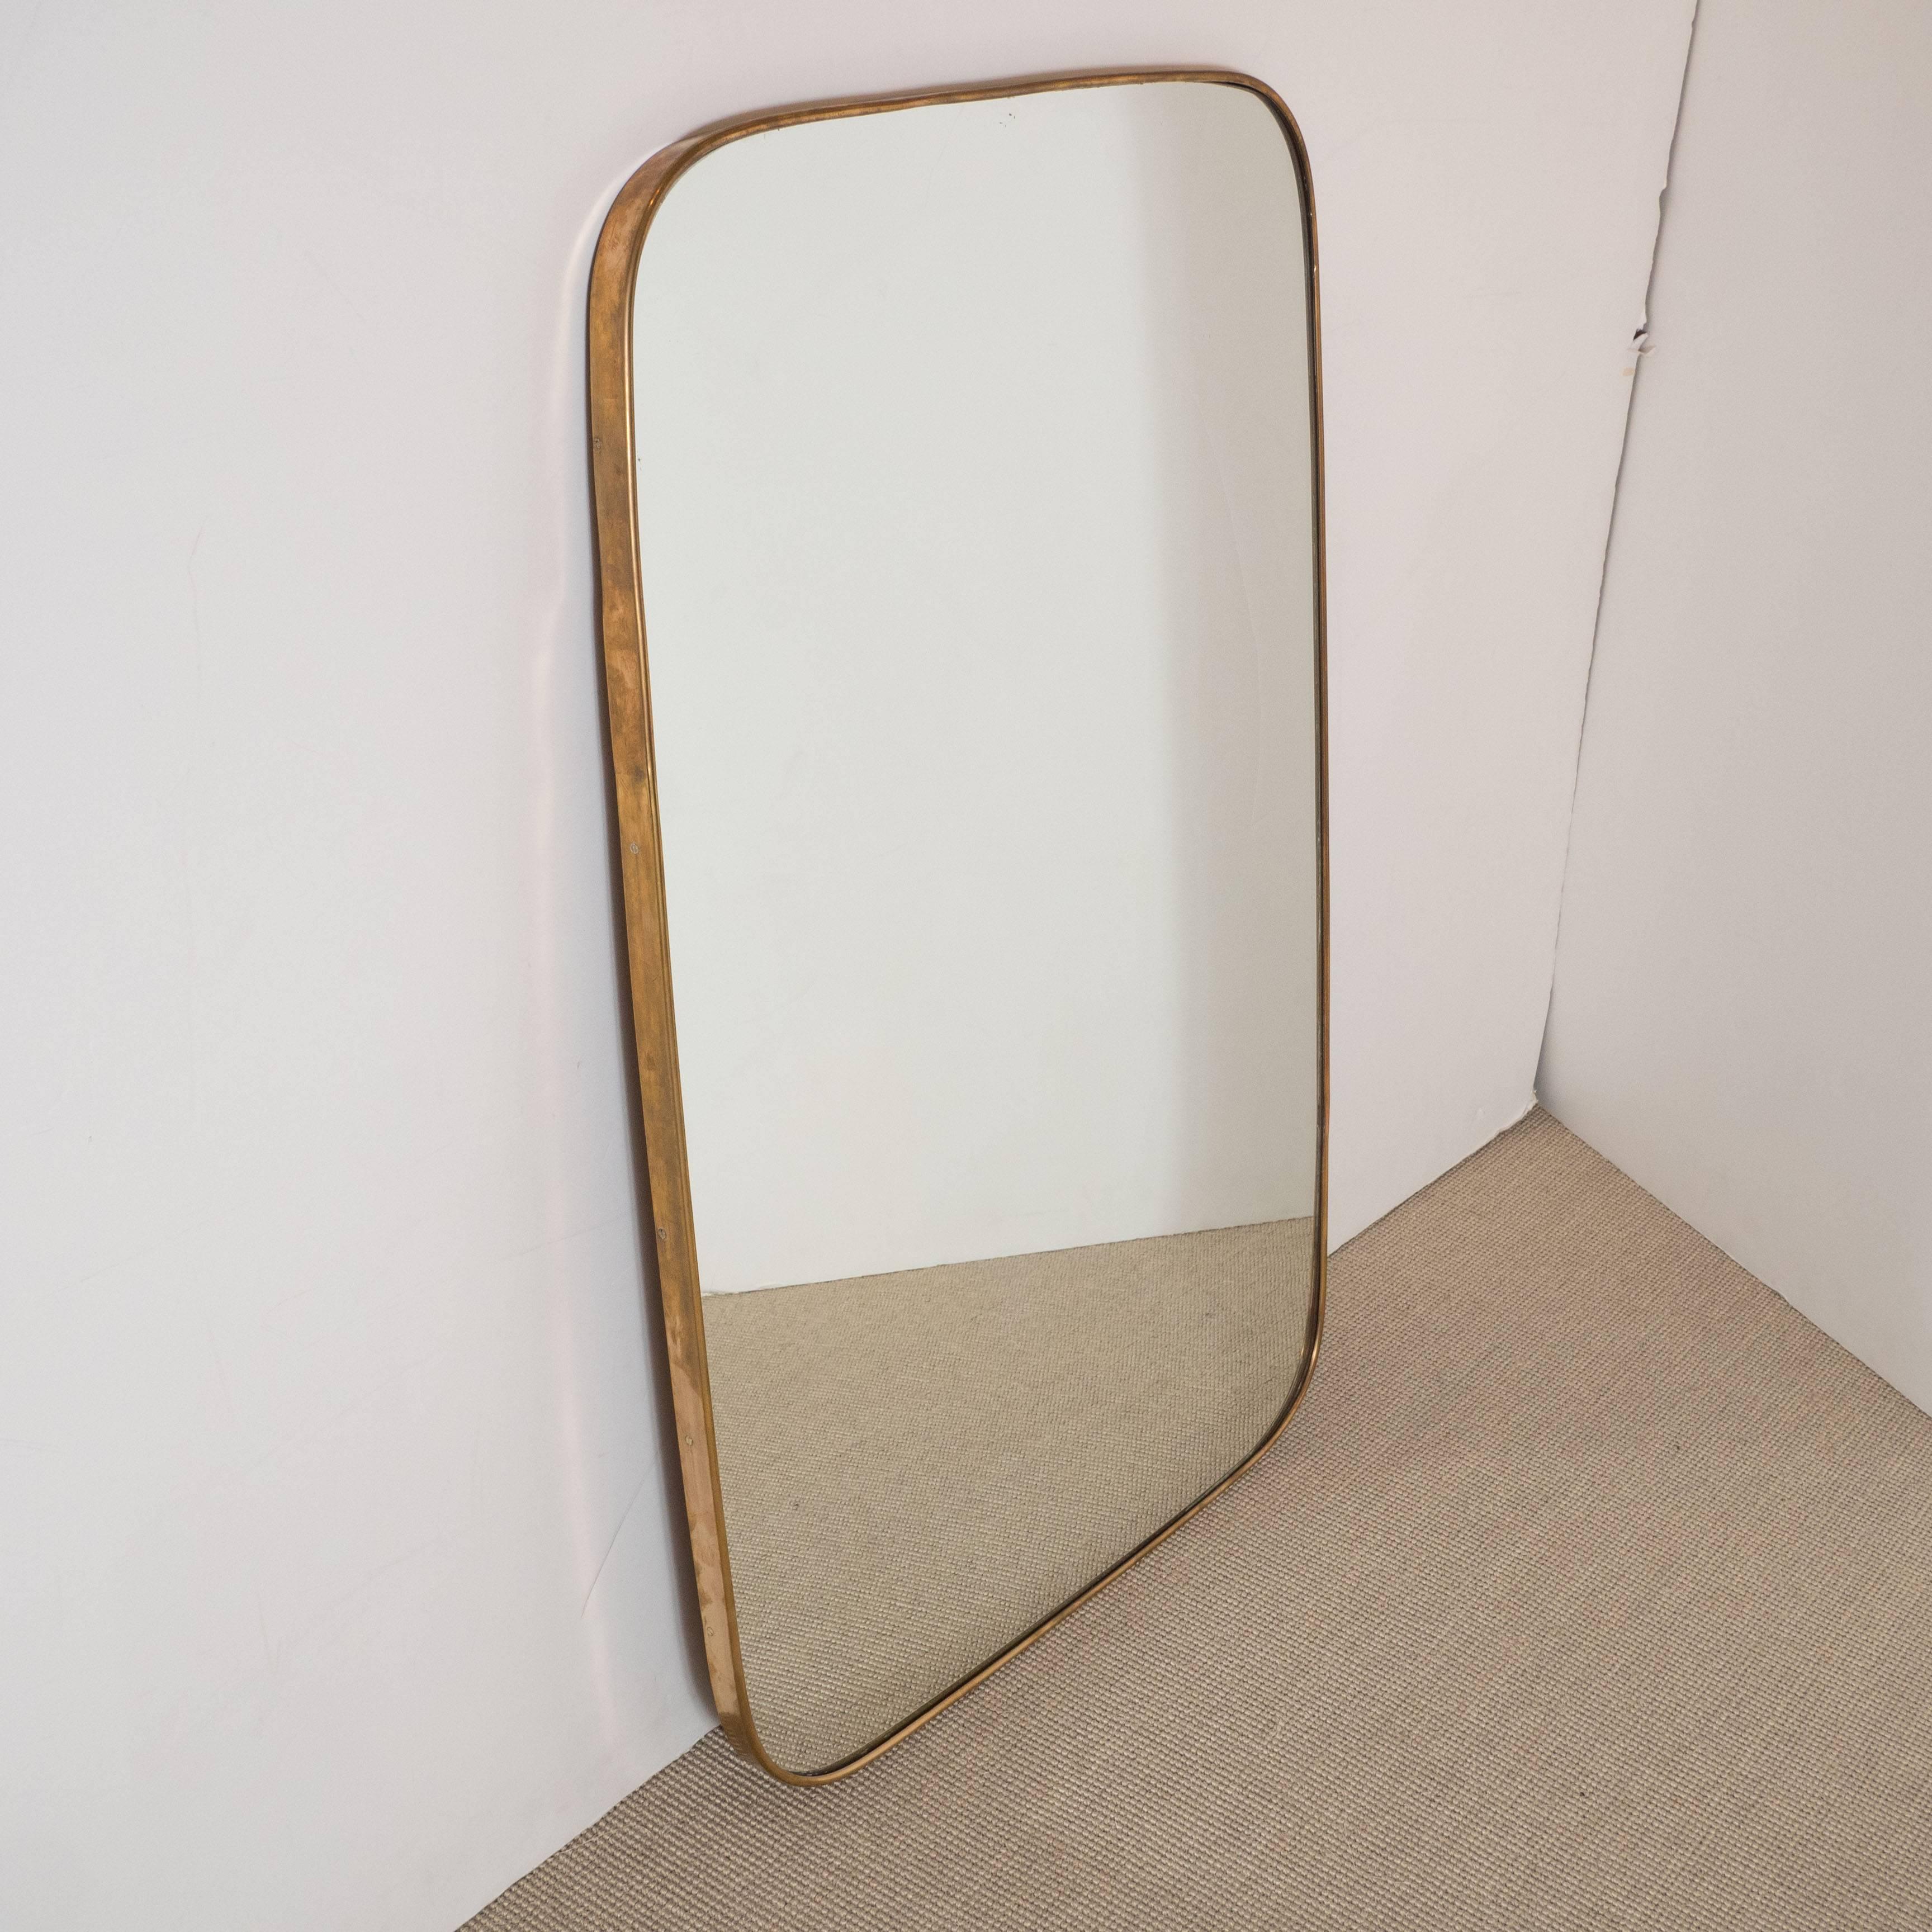 Italian modernist mirror in a cushion shape.